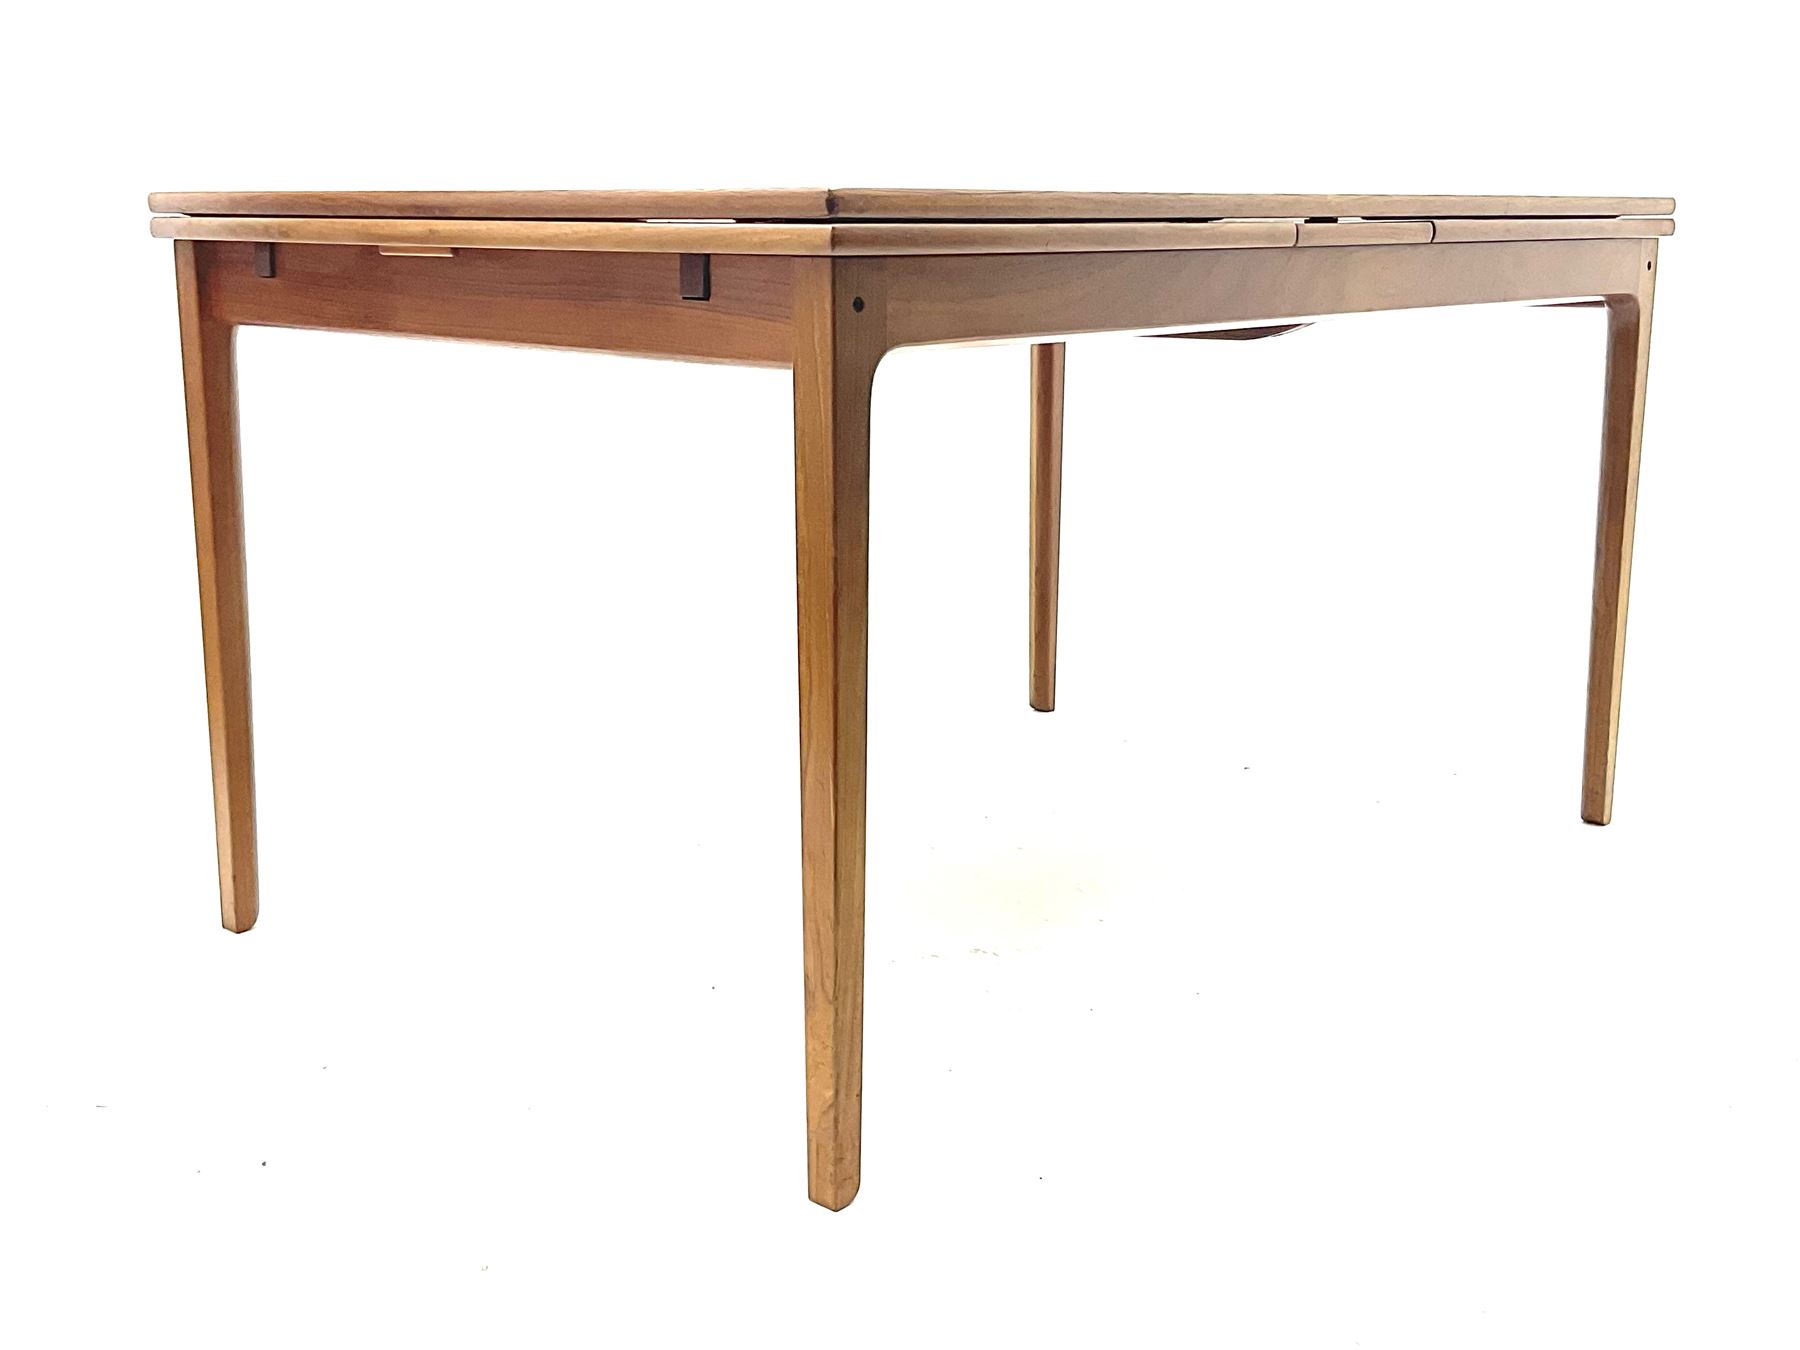 France & Sons - Mid 20th century teak drawer leaf dining table